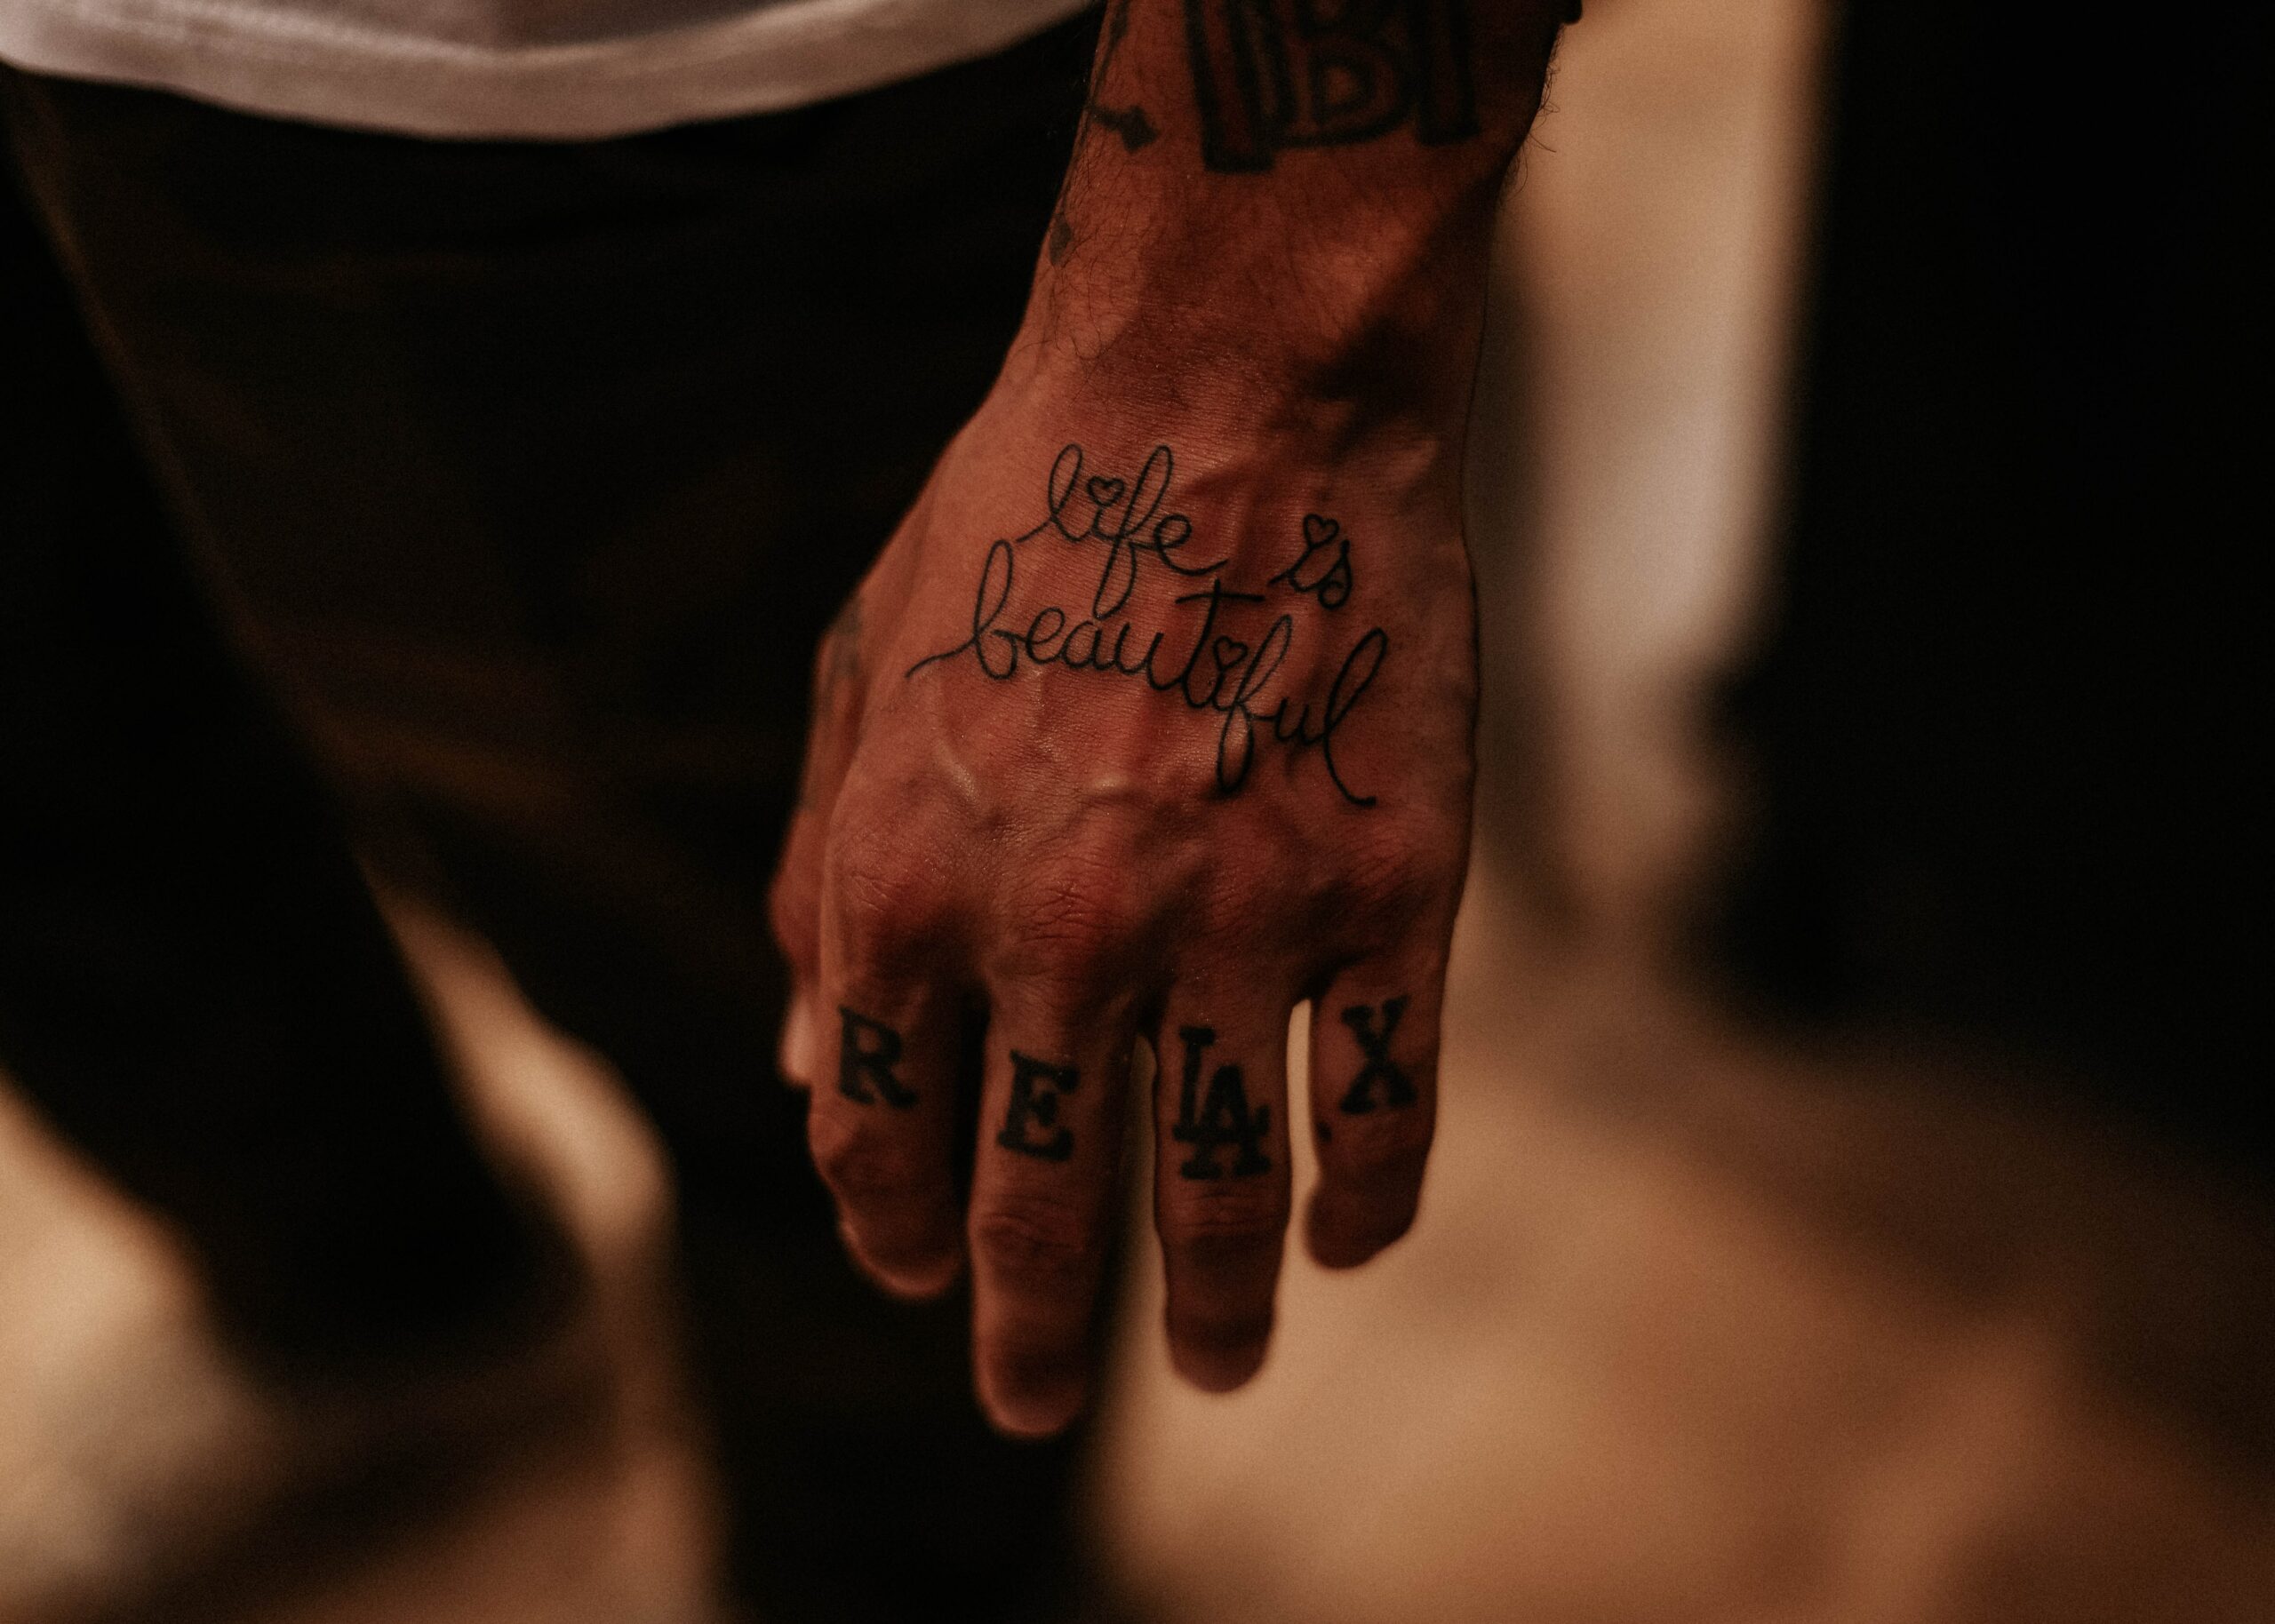 Getting A Hand Tattoo